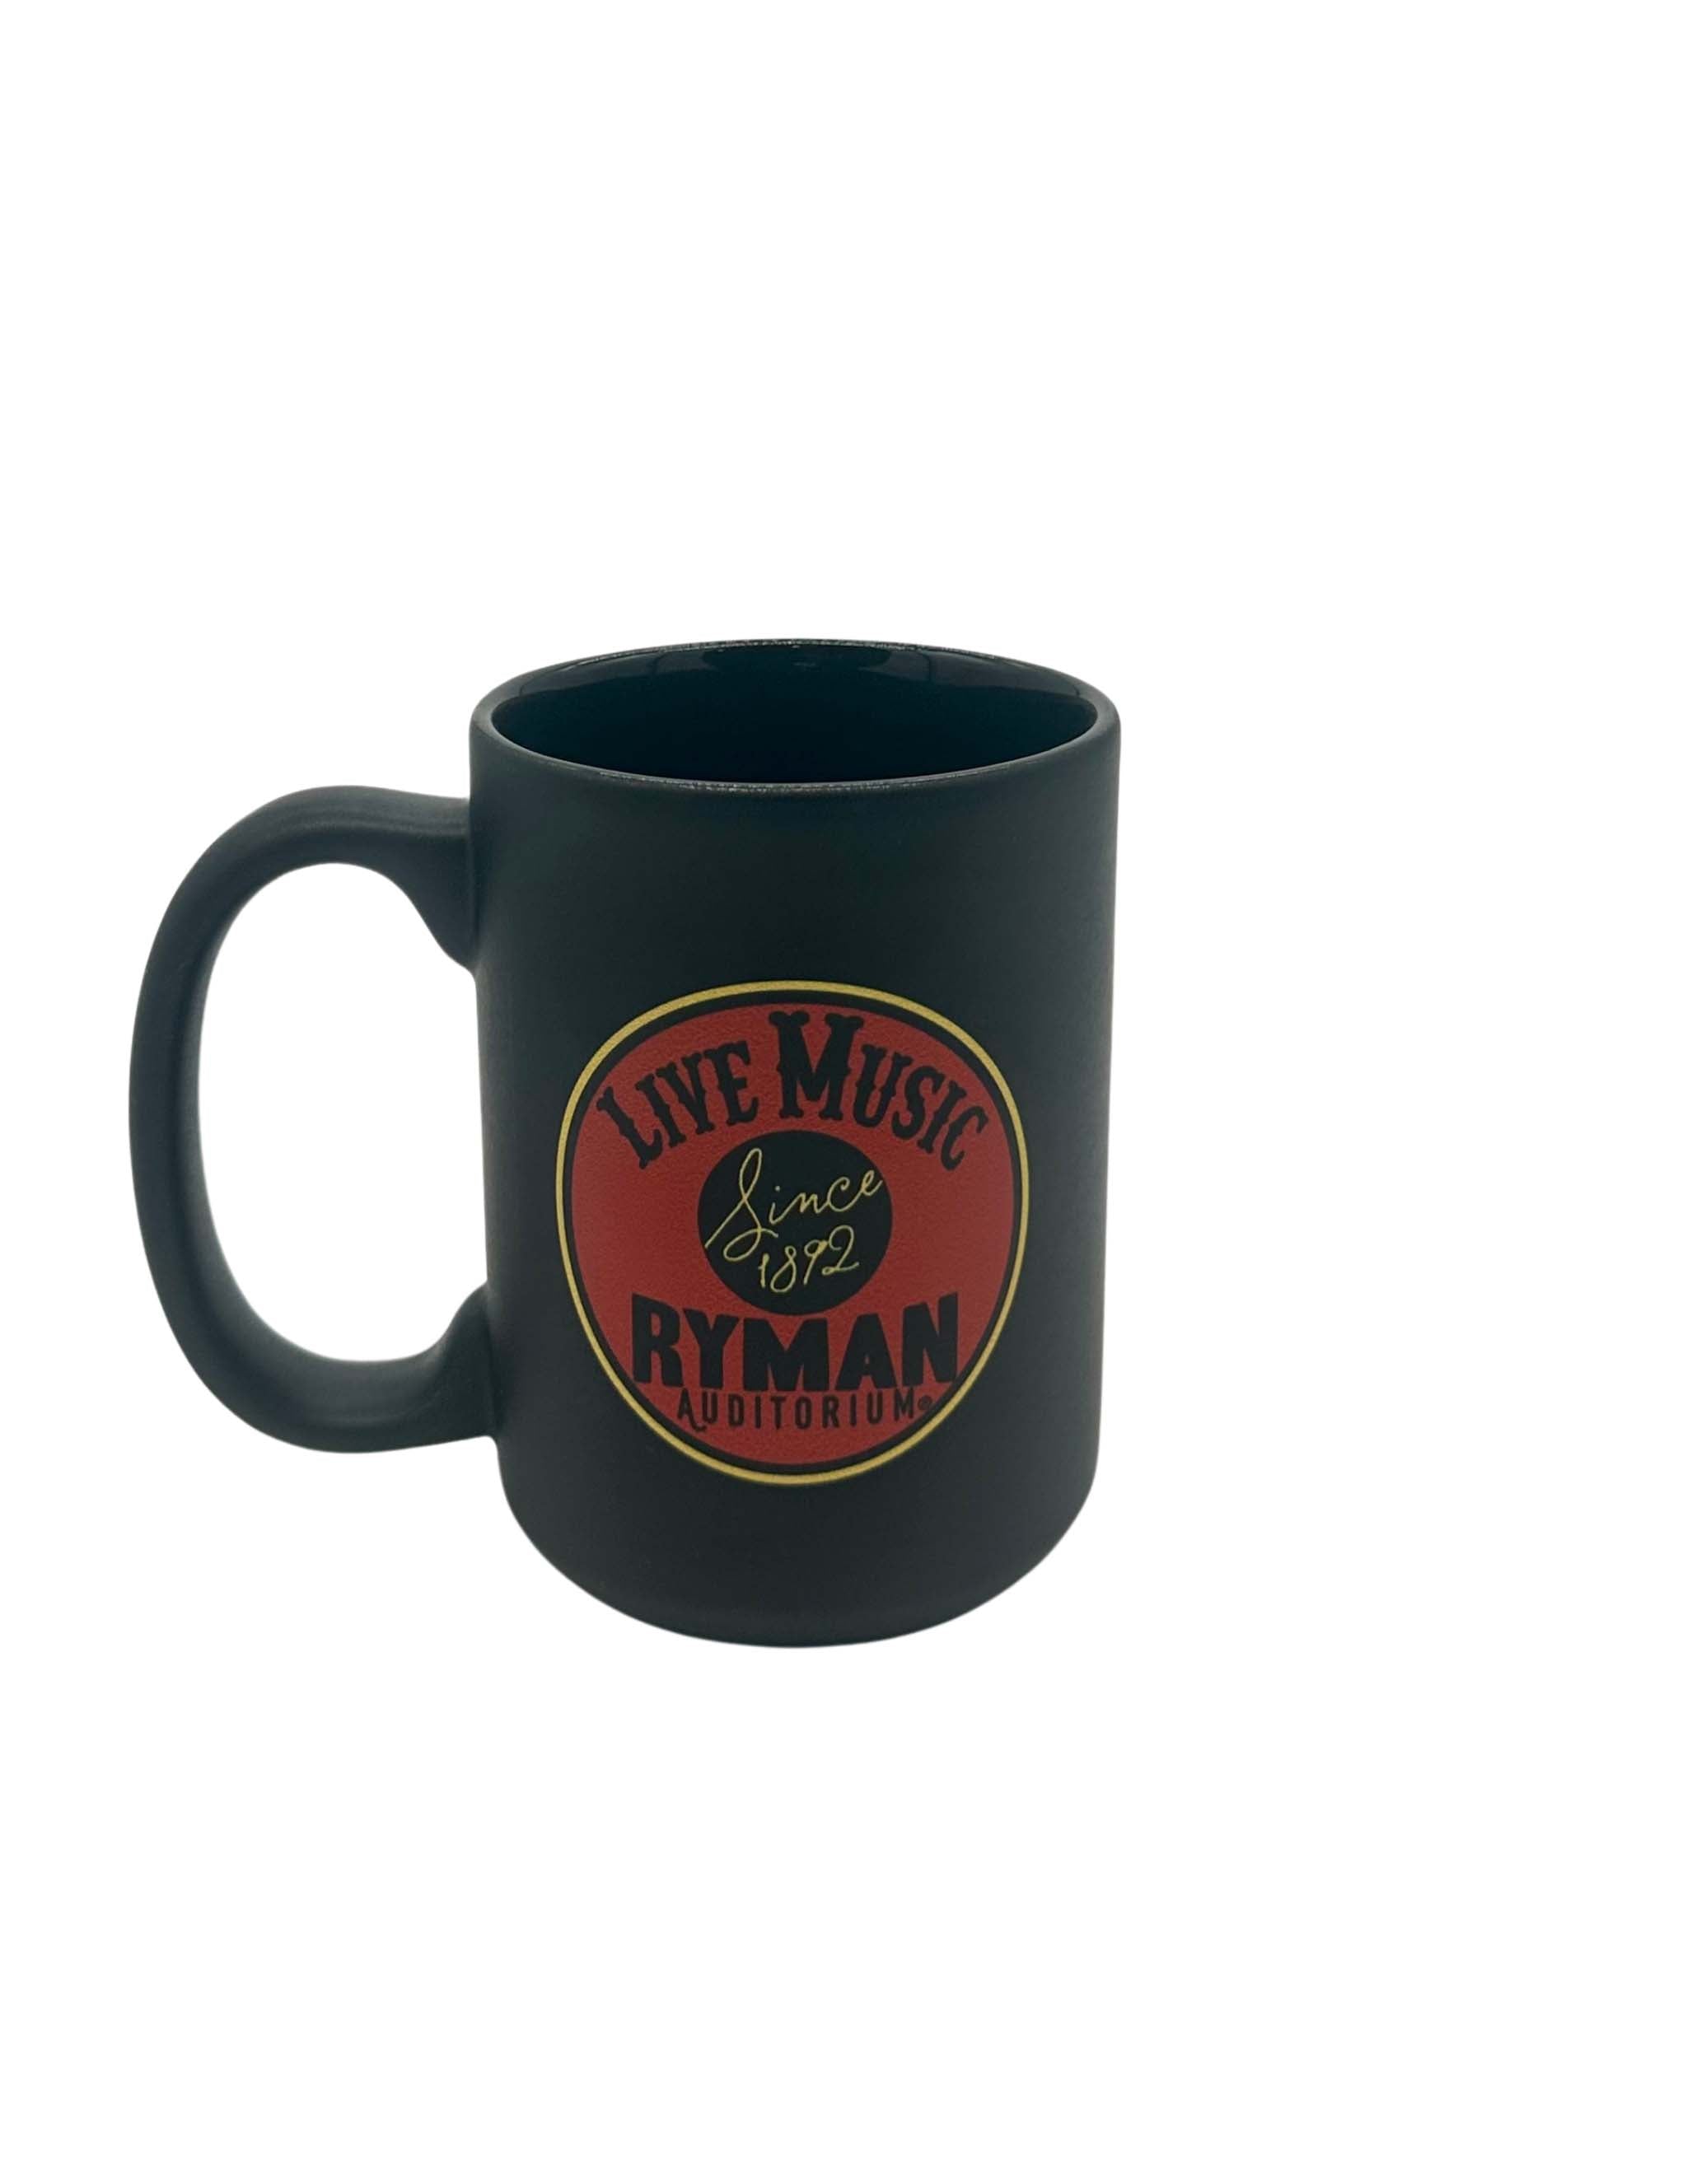 Ryman On The Record Coffee Mug